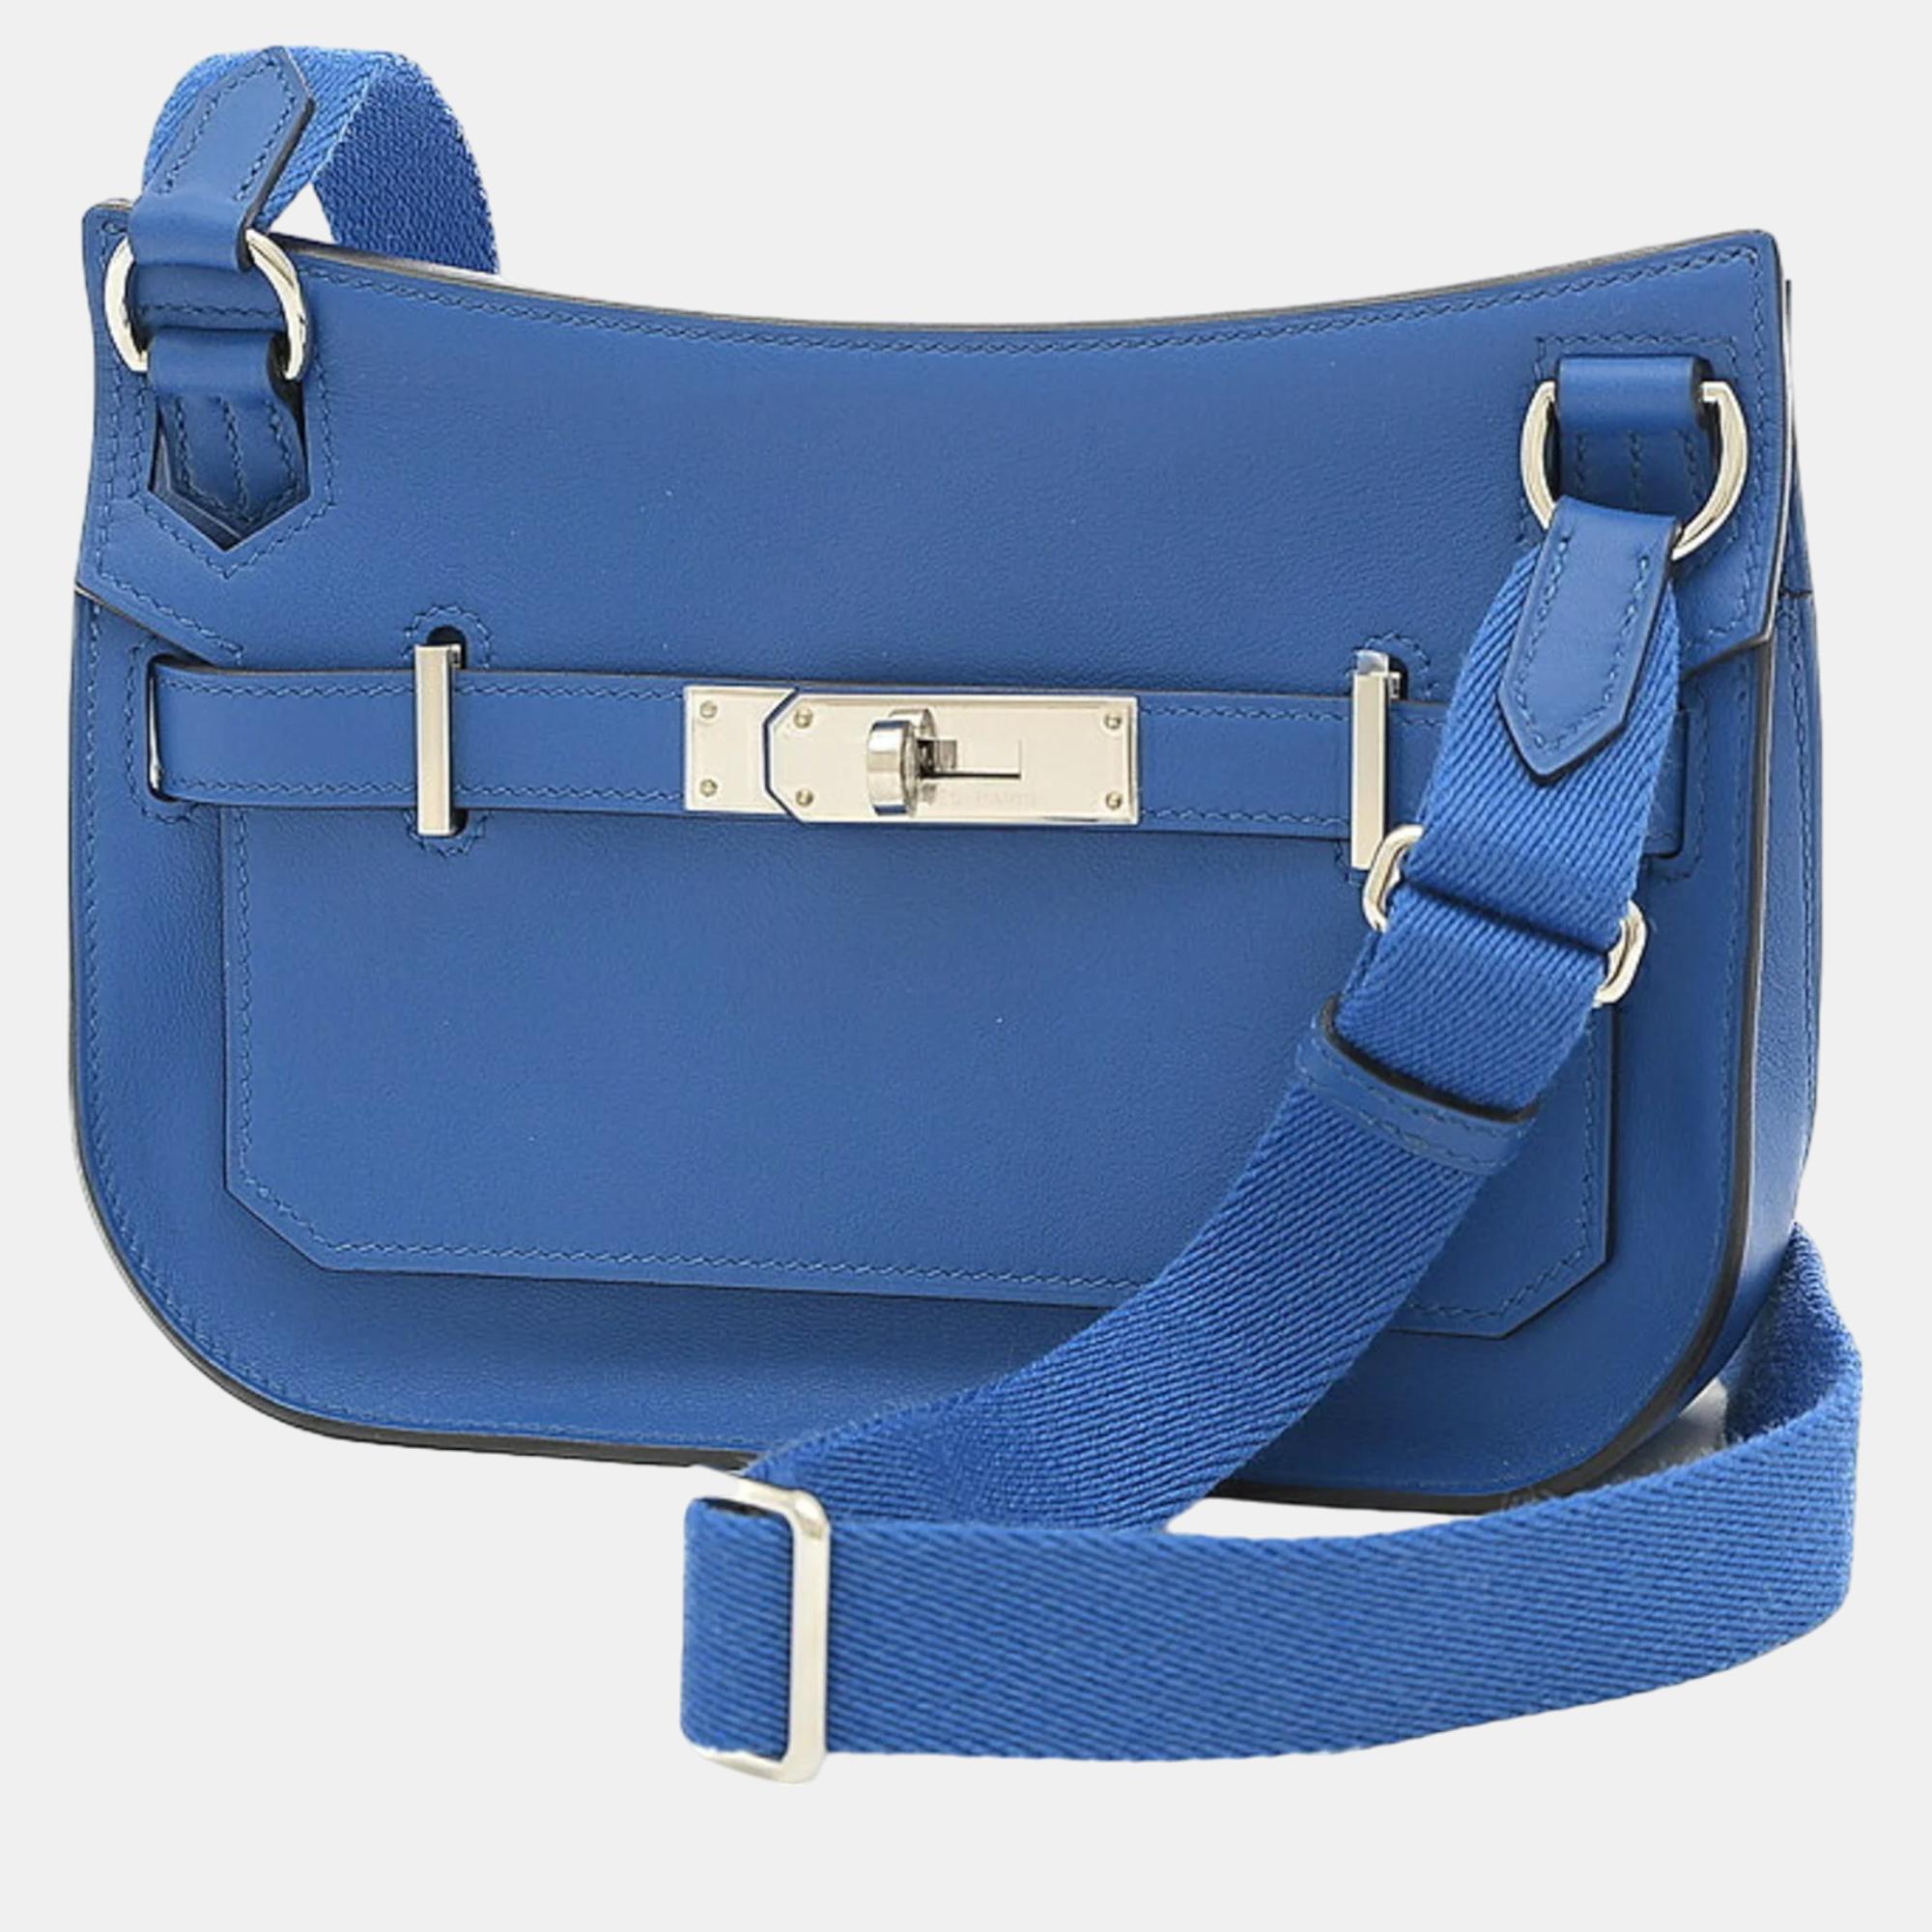 Hermes blue france swift silver hardware b engraved mini gypsiere handbag